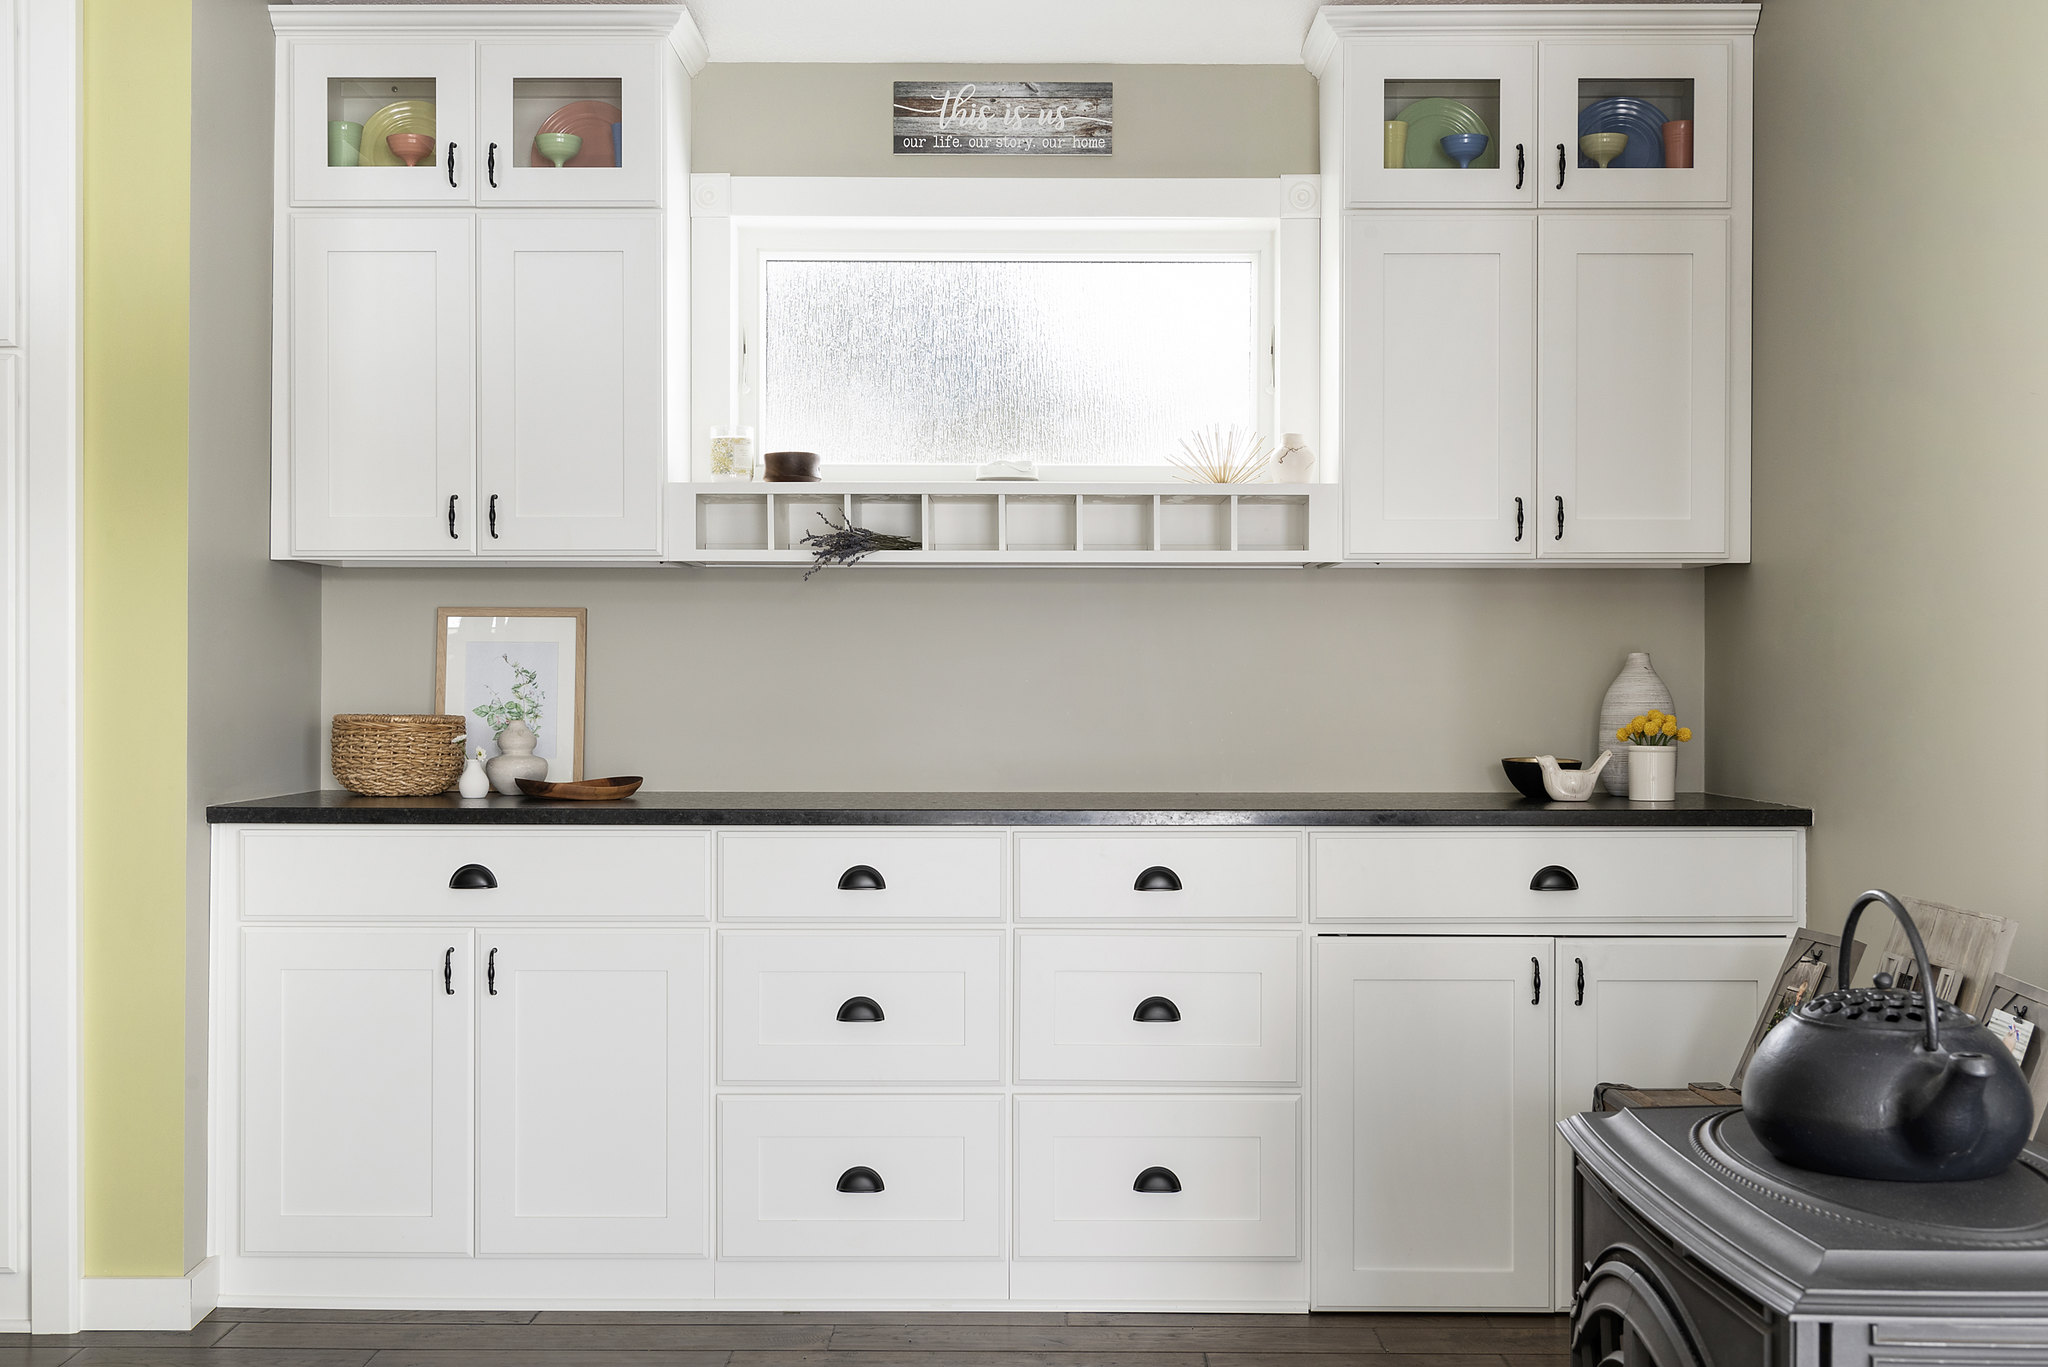 Kitchen remodel by White Birch Design, A Lakeville MN based remodeler